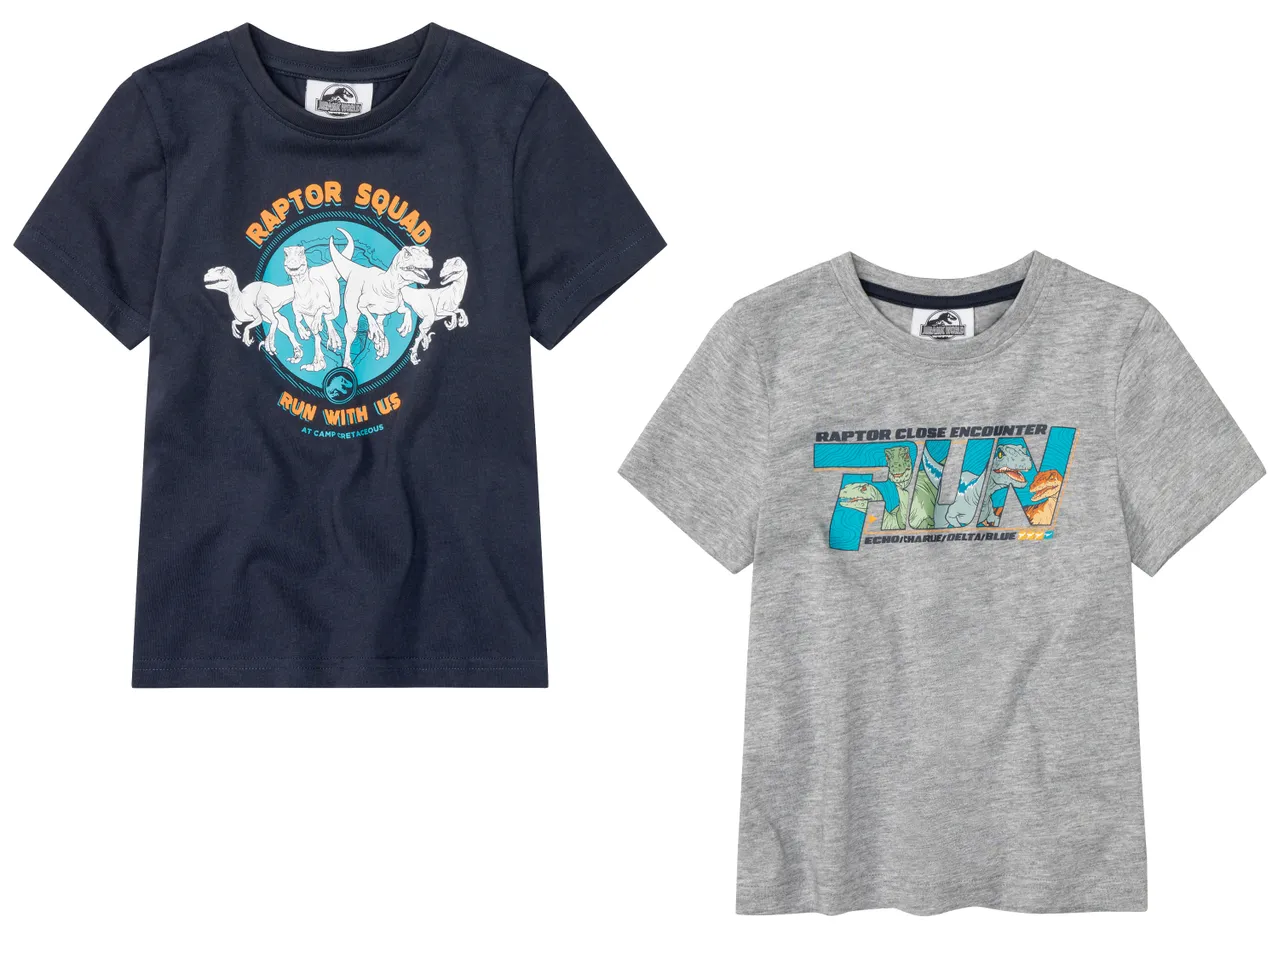 T-shirt da bambino Transformers, Paw , prezzo 6.99 EUR 
T-shirt da bambino &quot;Transformers, ...